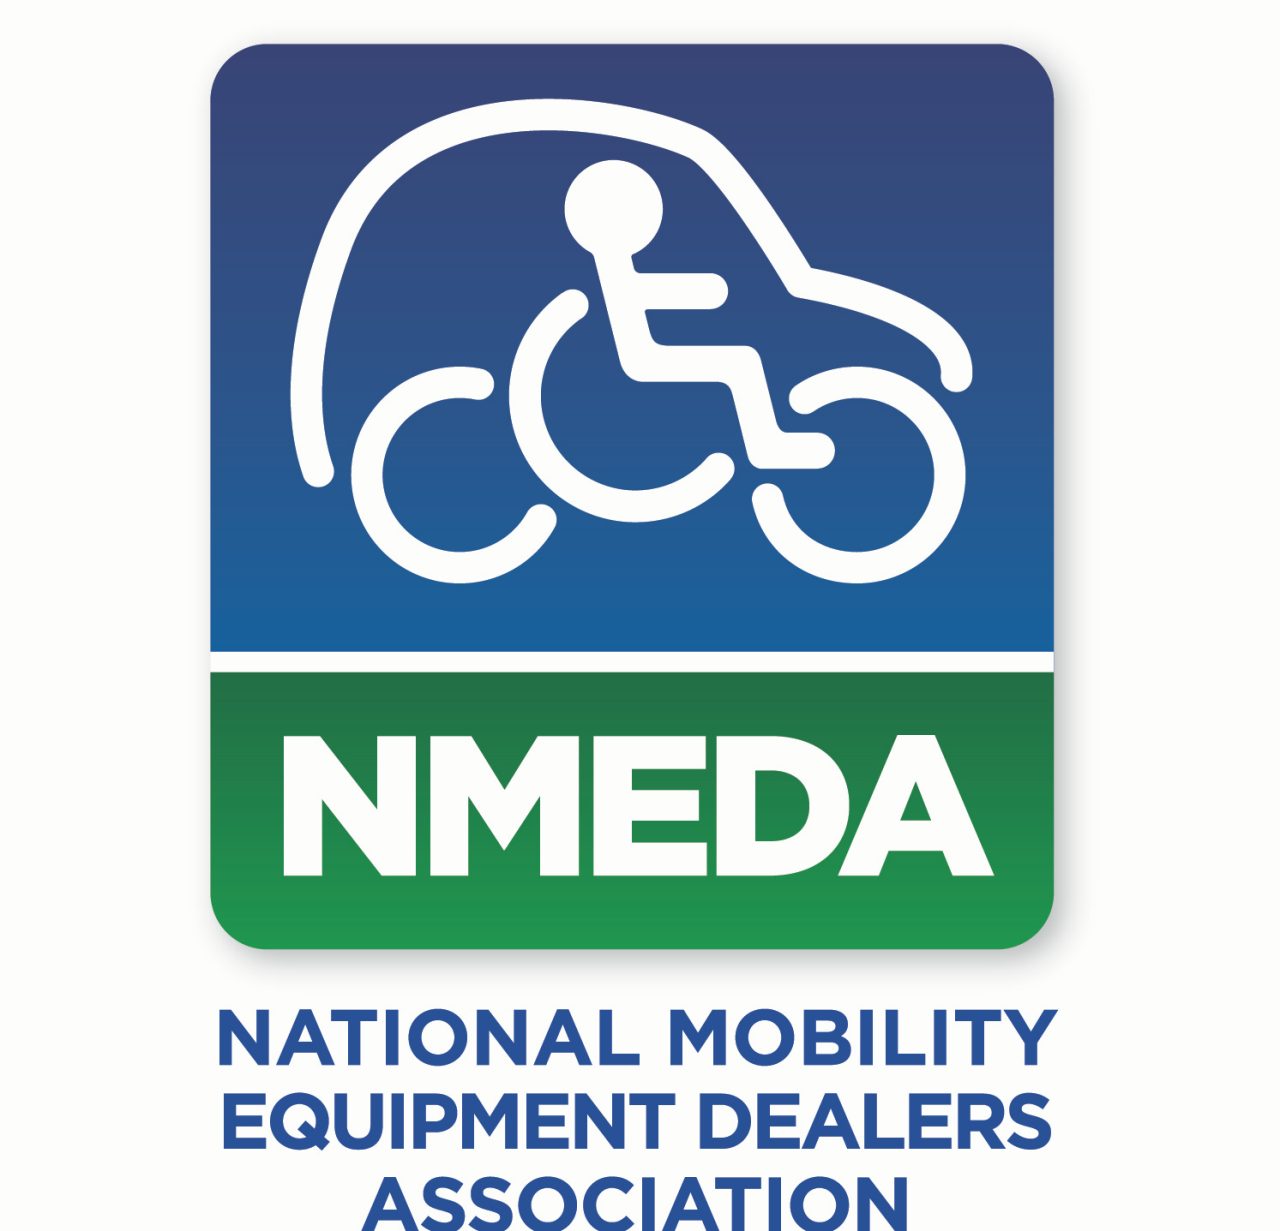 NMEDA: National Mobility Equipment Dealers Association